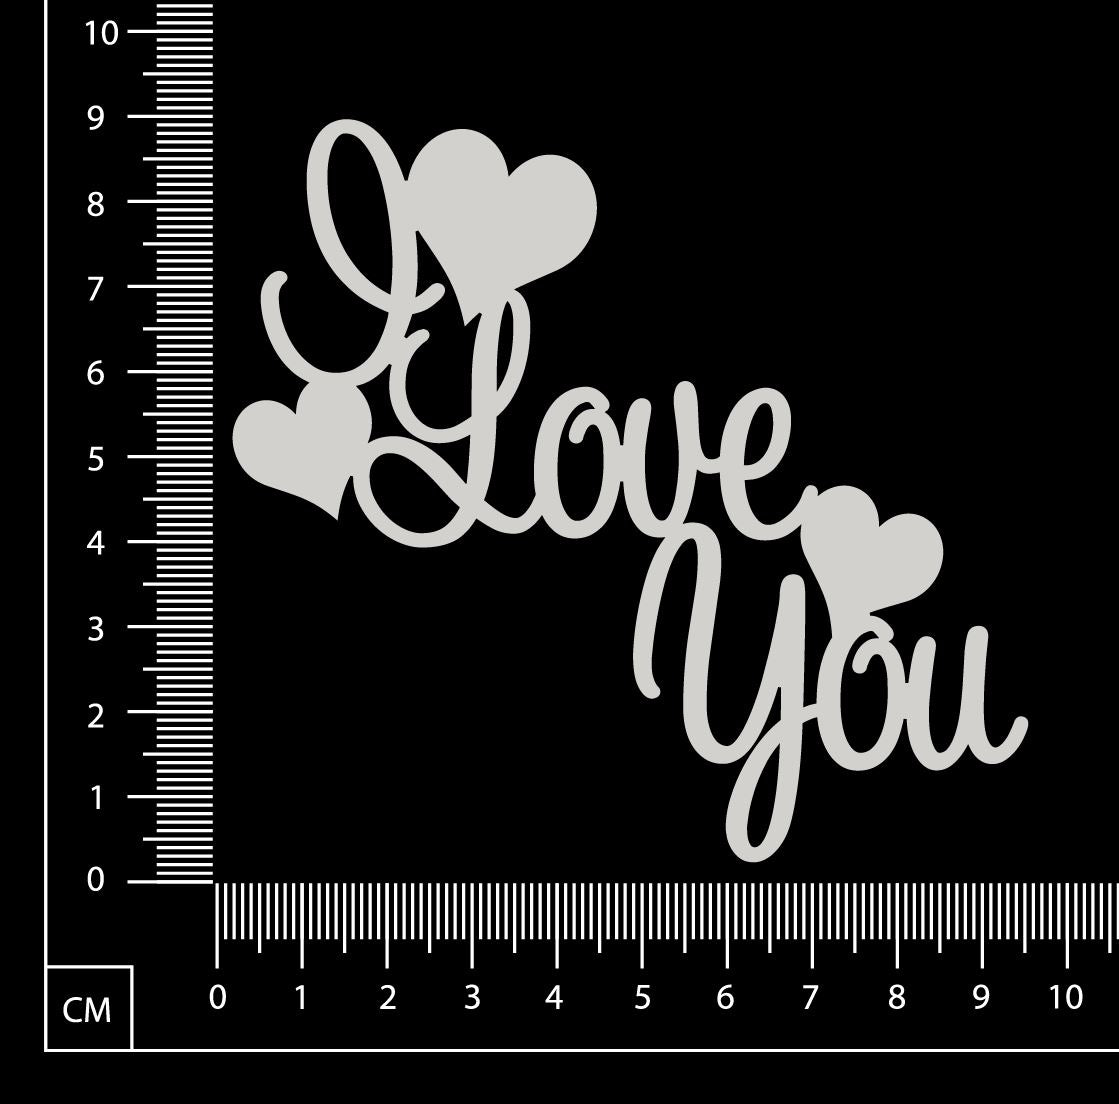 I Love You - White Chipboard